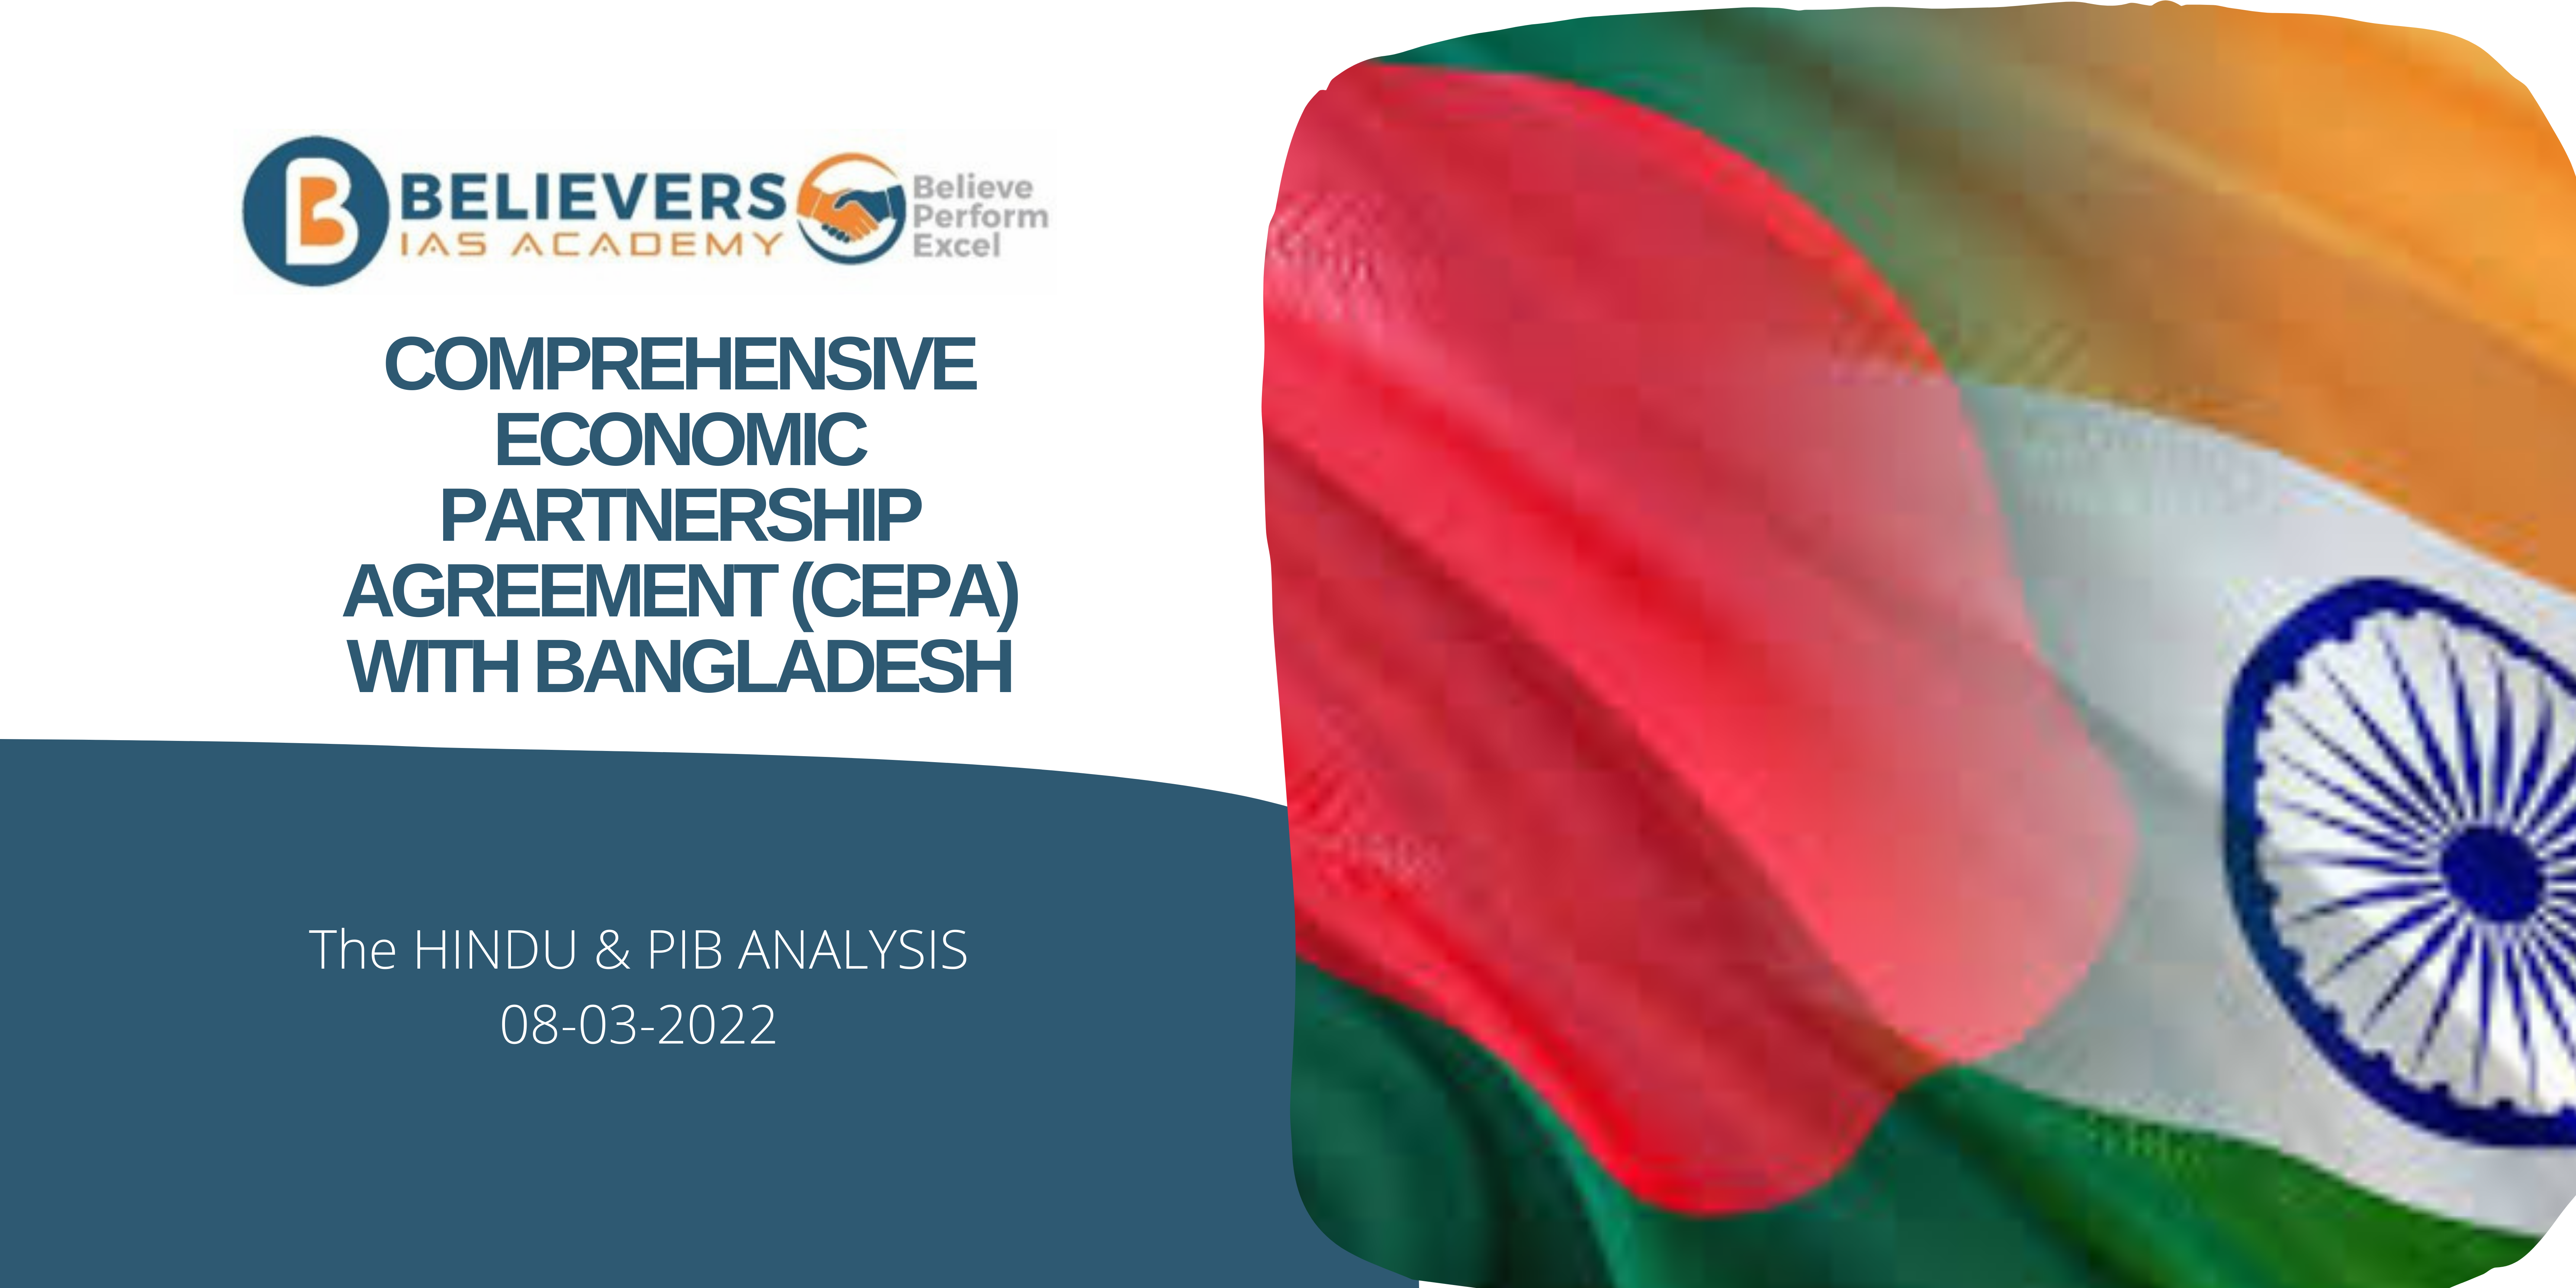 IAS Current affairs - Comprehensive Economic Partnership Agreement (CEPA) with Bangladesh